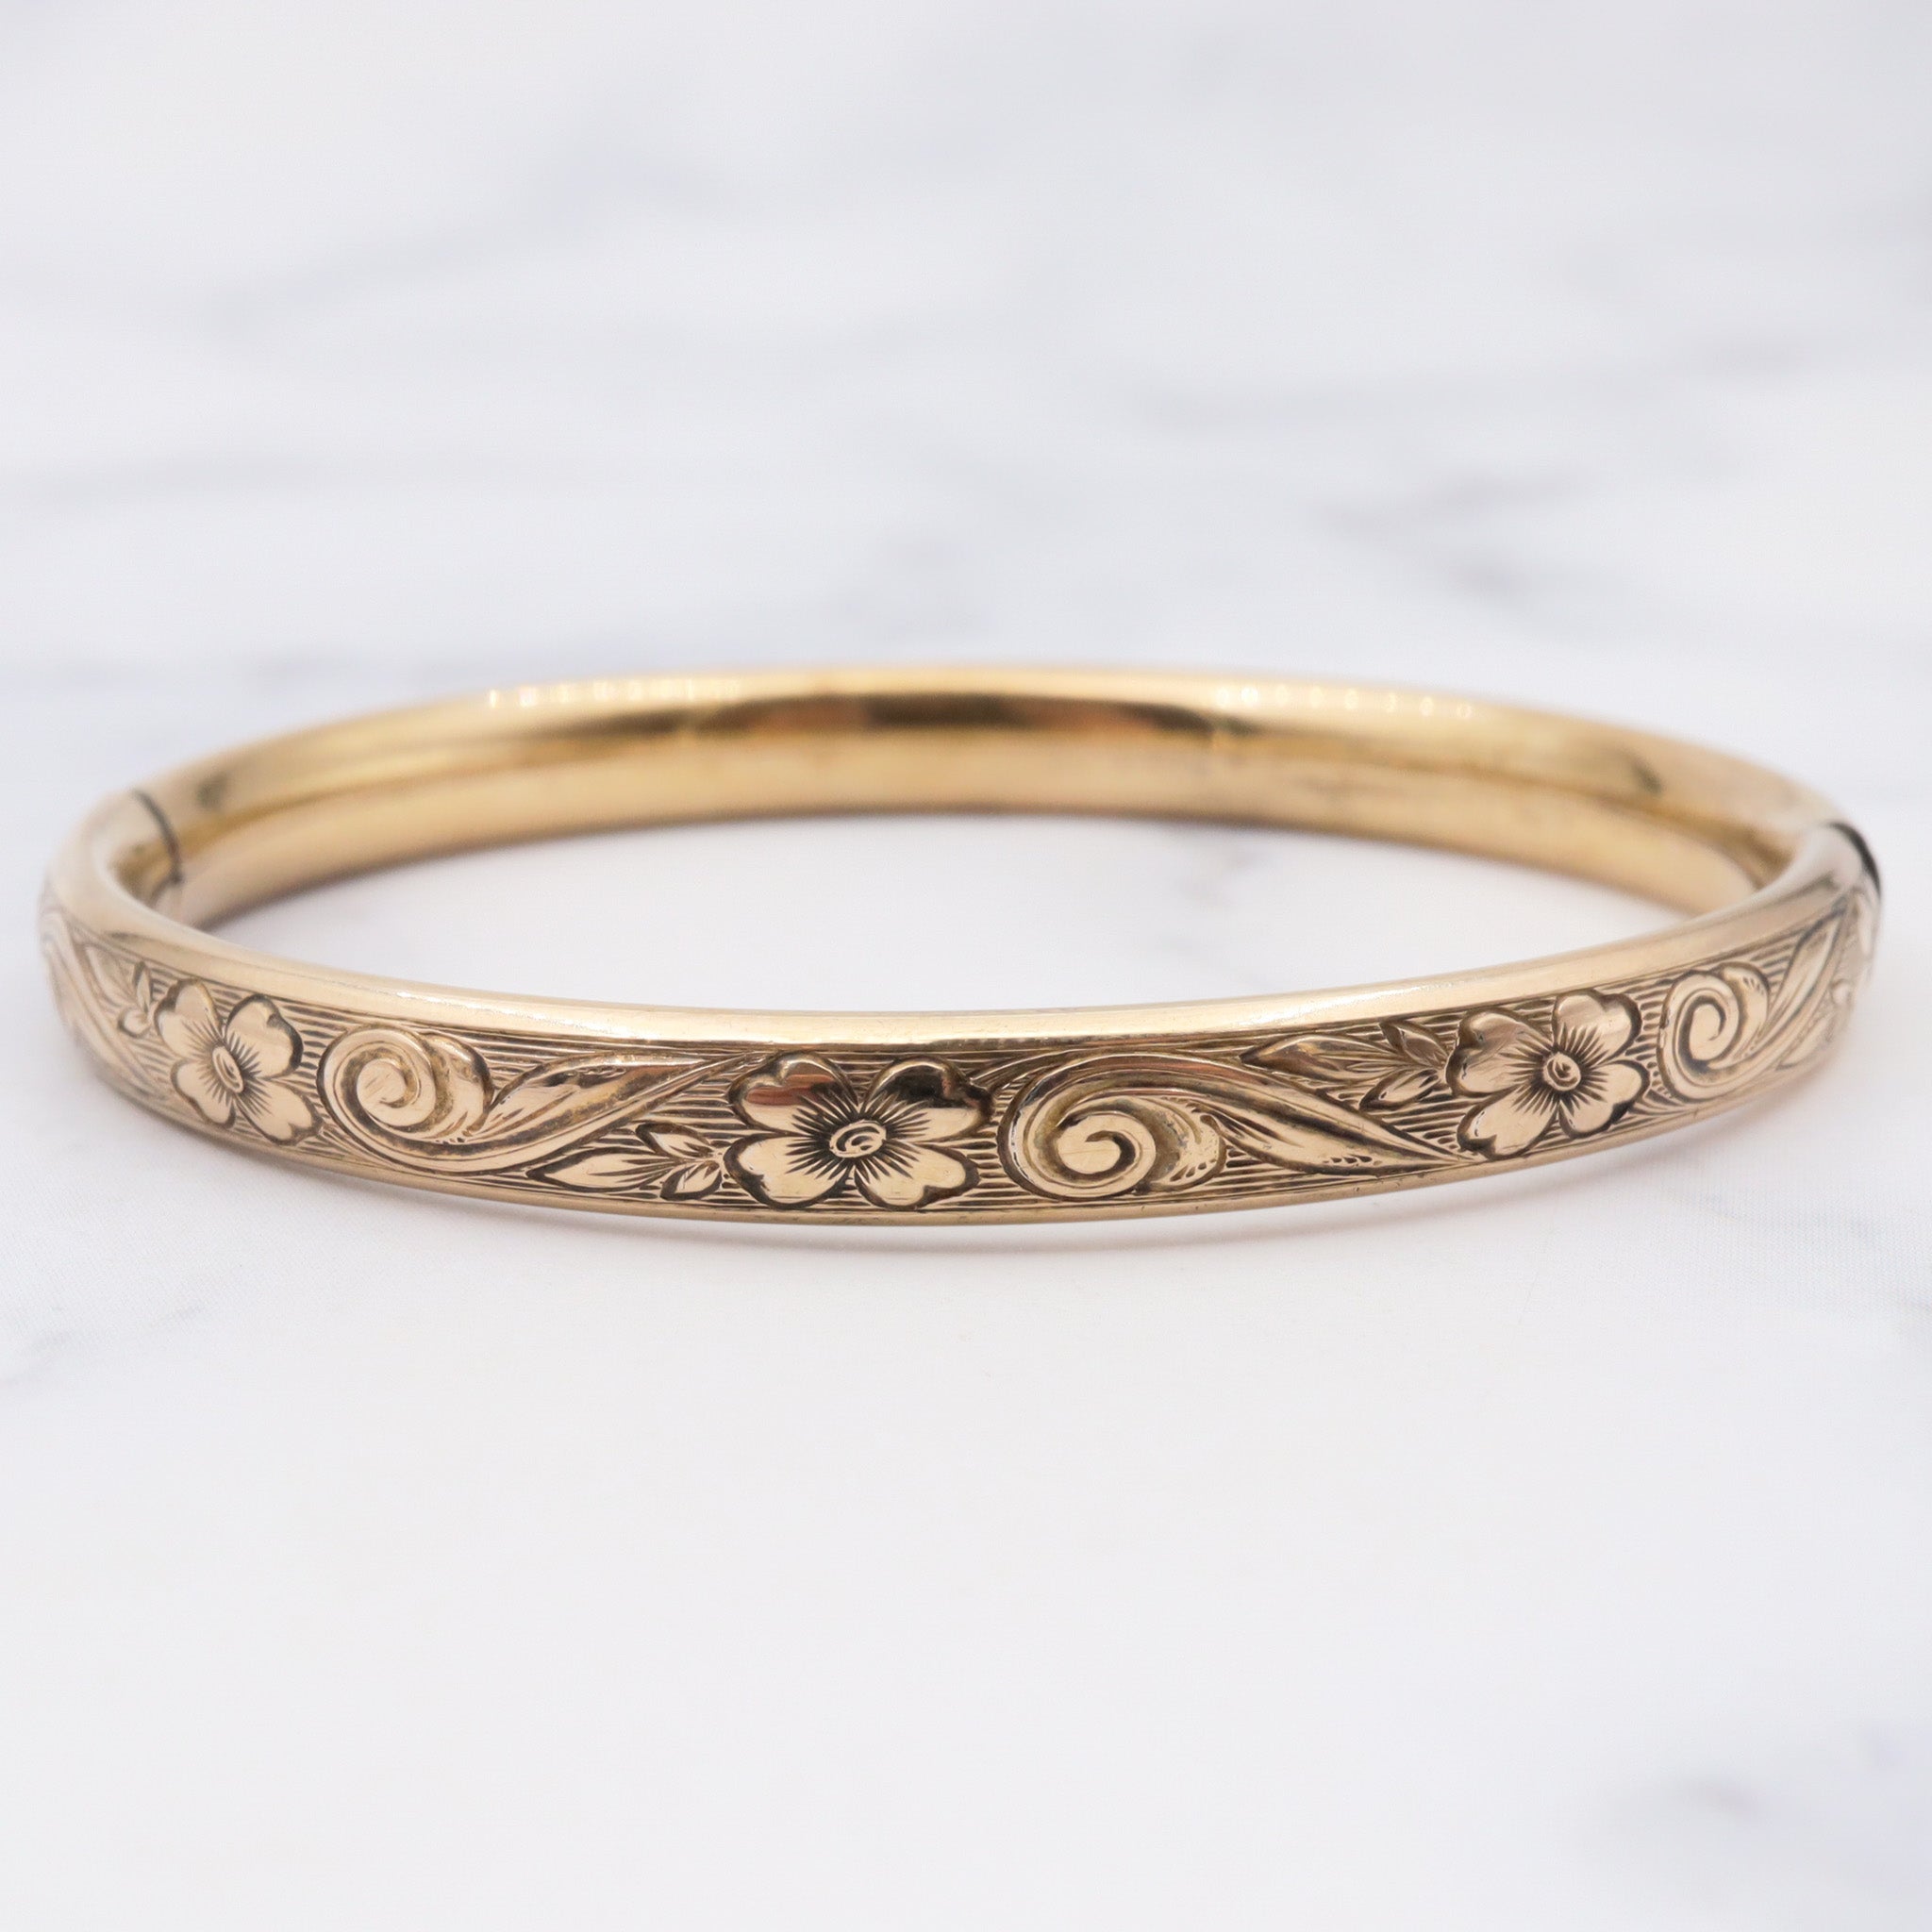 Antique Victorian 12k gold-filled over sterling hinged child's bangle